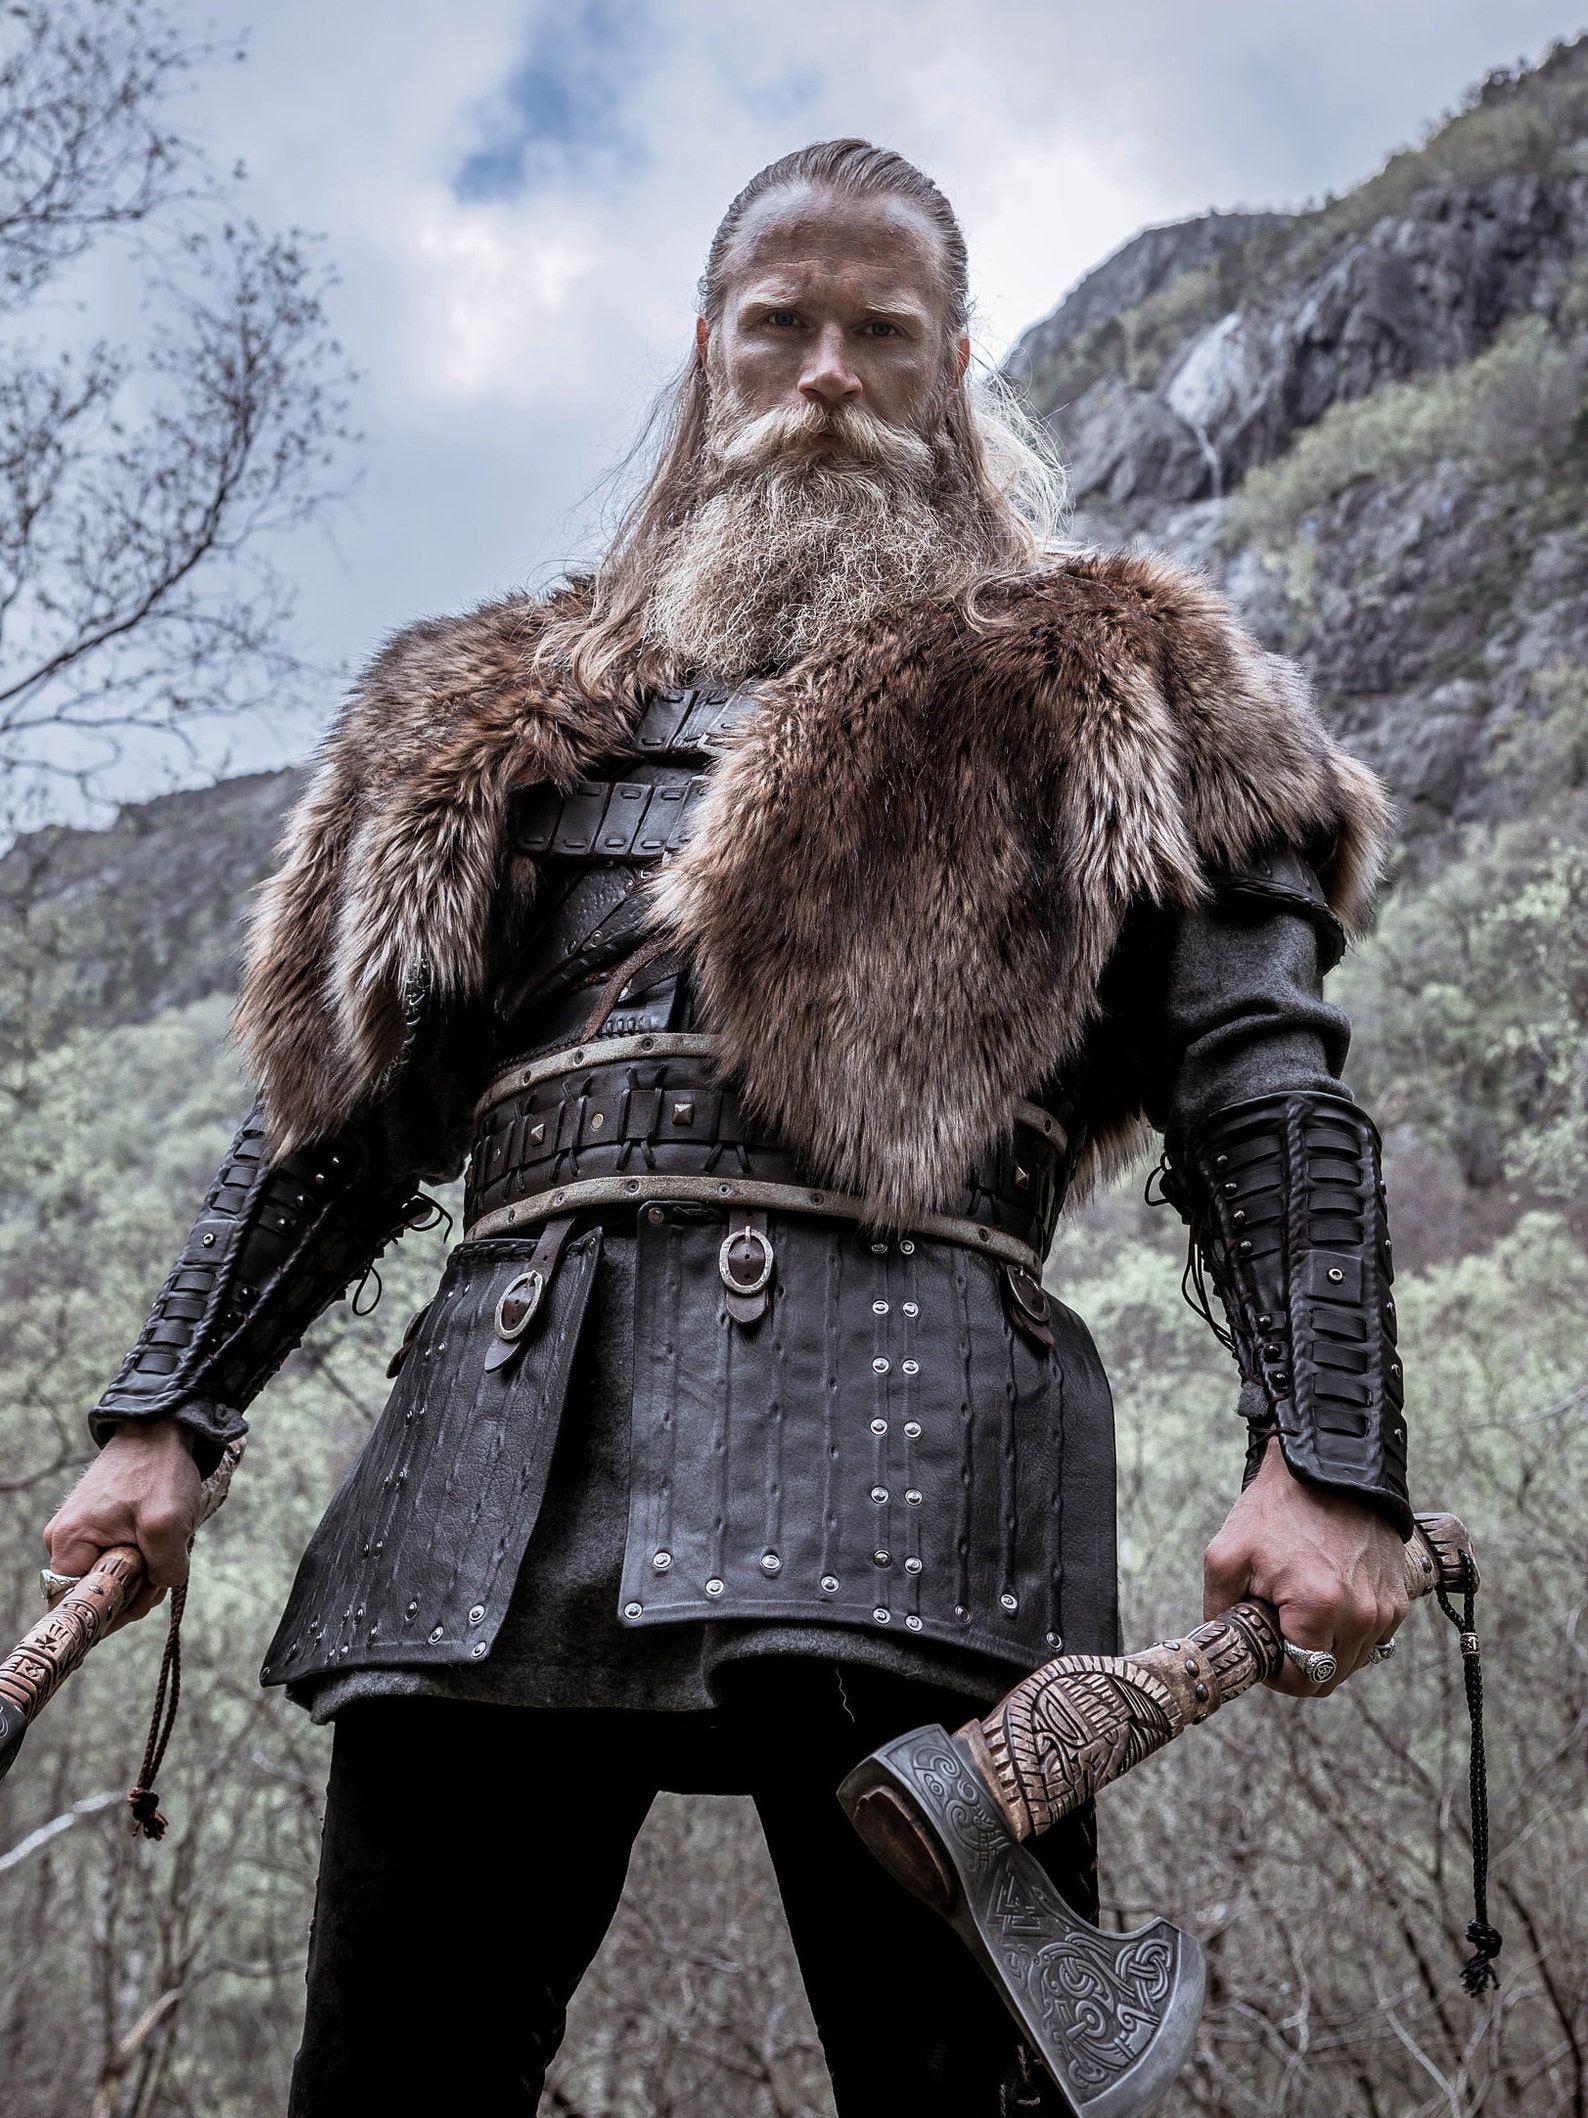 Ivar The Boneless armor from Vikings season 4 exact copy: | Etsy